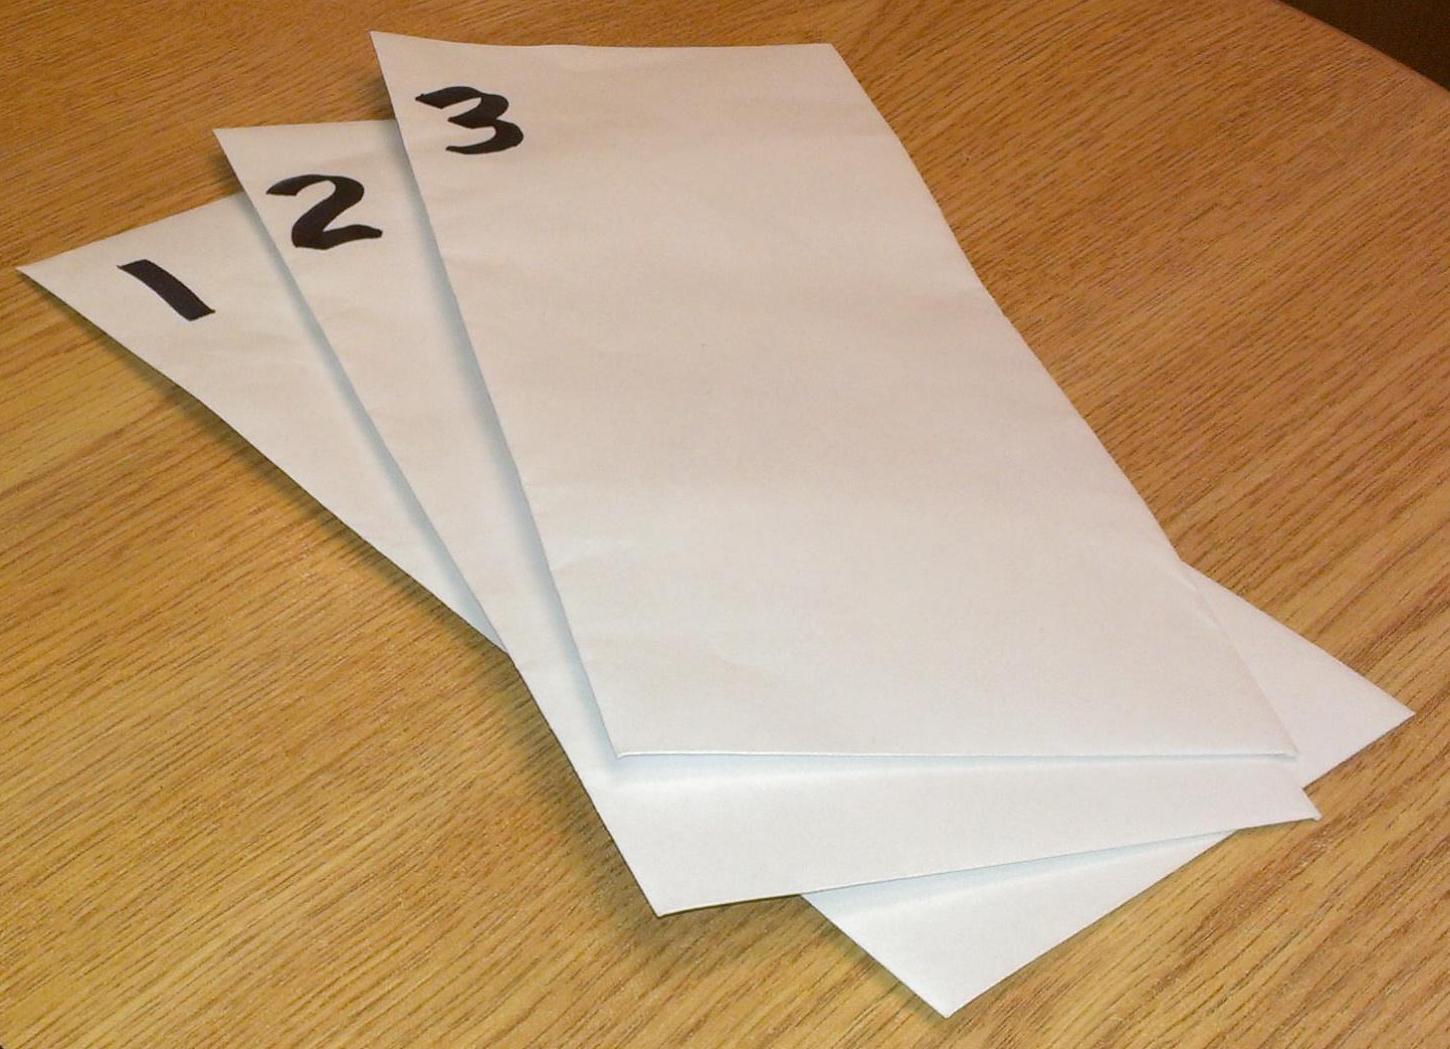 Three-envelopes.jpg